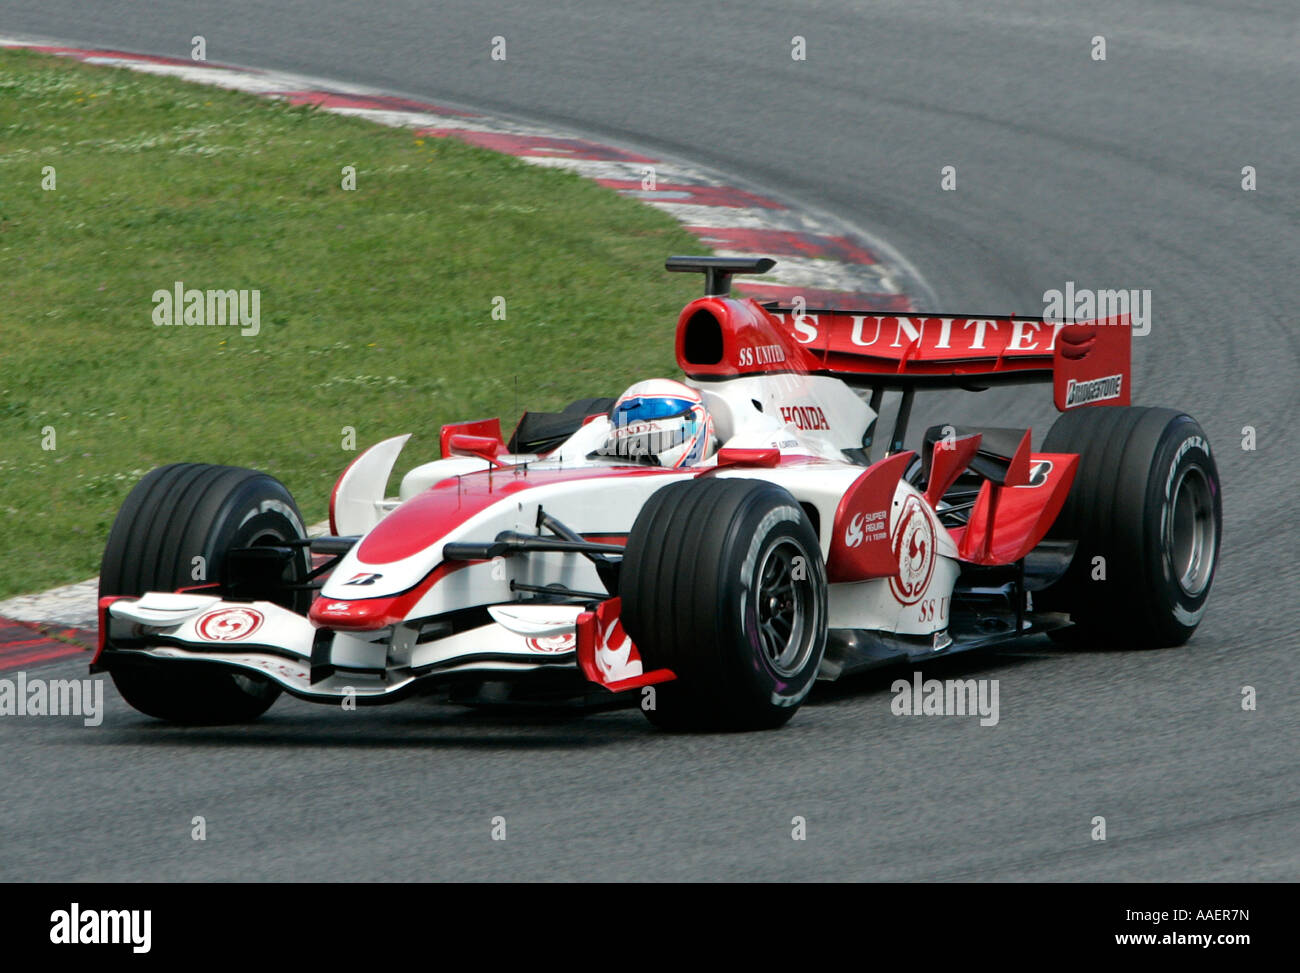 Anthony Davidson Super Aguri Formula One Team 2007 in Montmelo verfolgen in Barcelona, Spanien Stockfoto